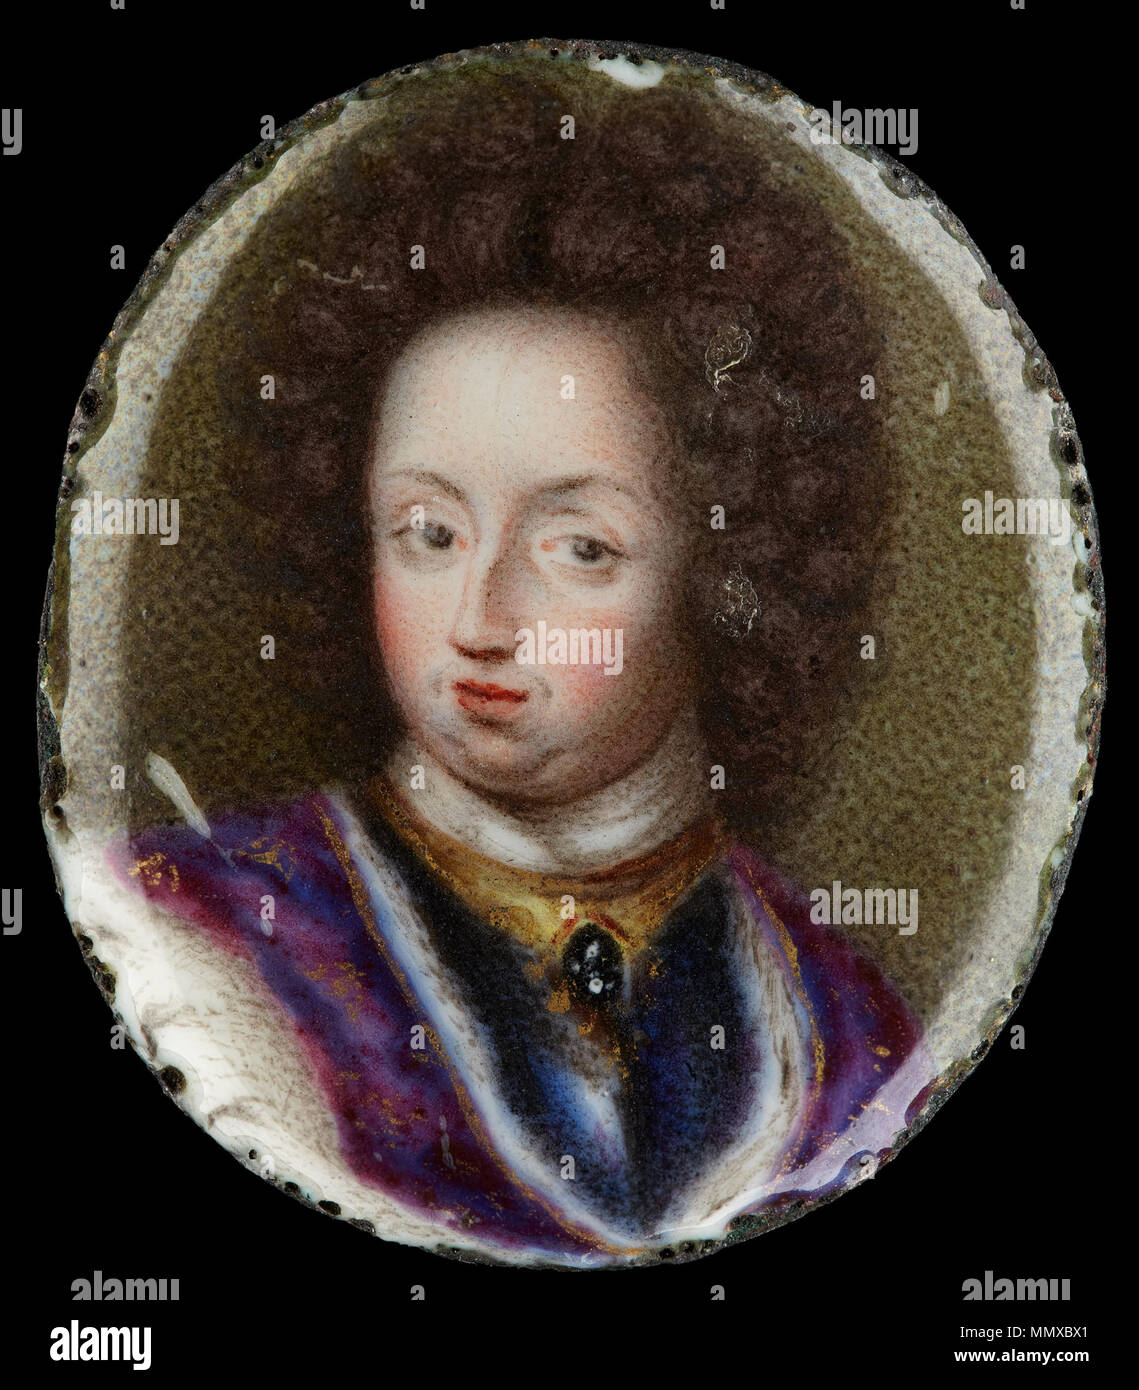 Retrato en miniatura de Carlos XI, Rey de Suecia 1660-1697. circa 1690. Erik Utterhielm - Miniatura retrato de Carlos XI, Rey de Suecia 1660-1697 - Proyecto de arte de Google Foto de stock